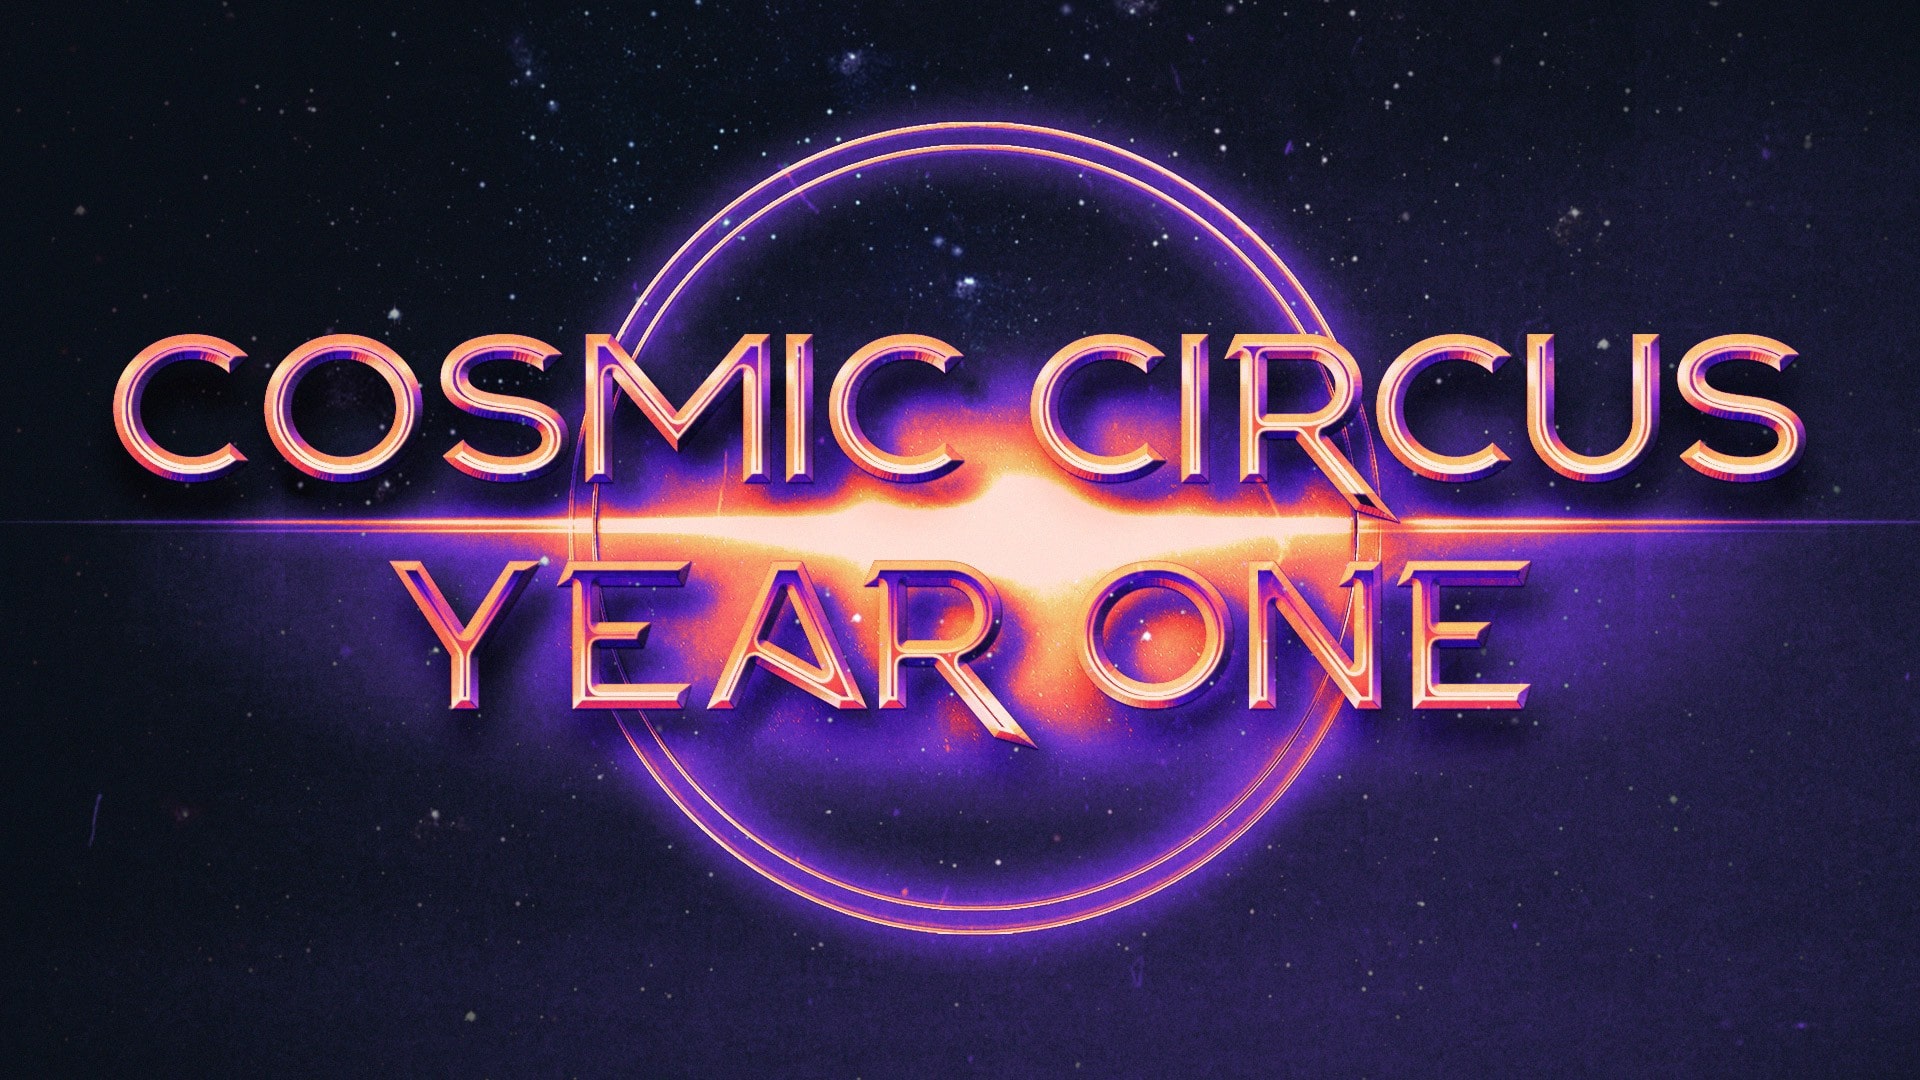 The Cosmic Circus Celebrates 1 Year Anniversary